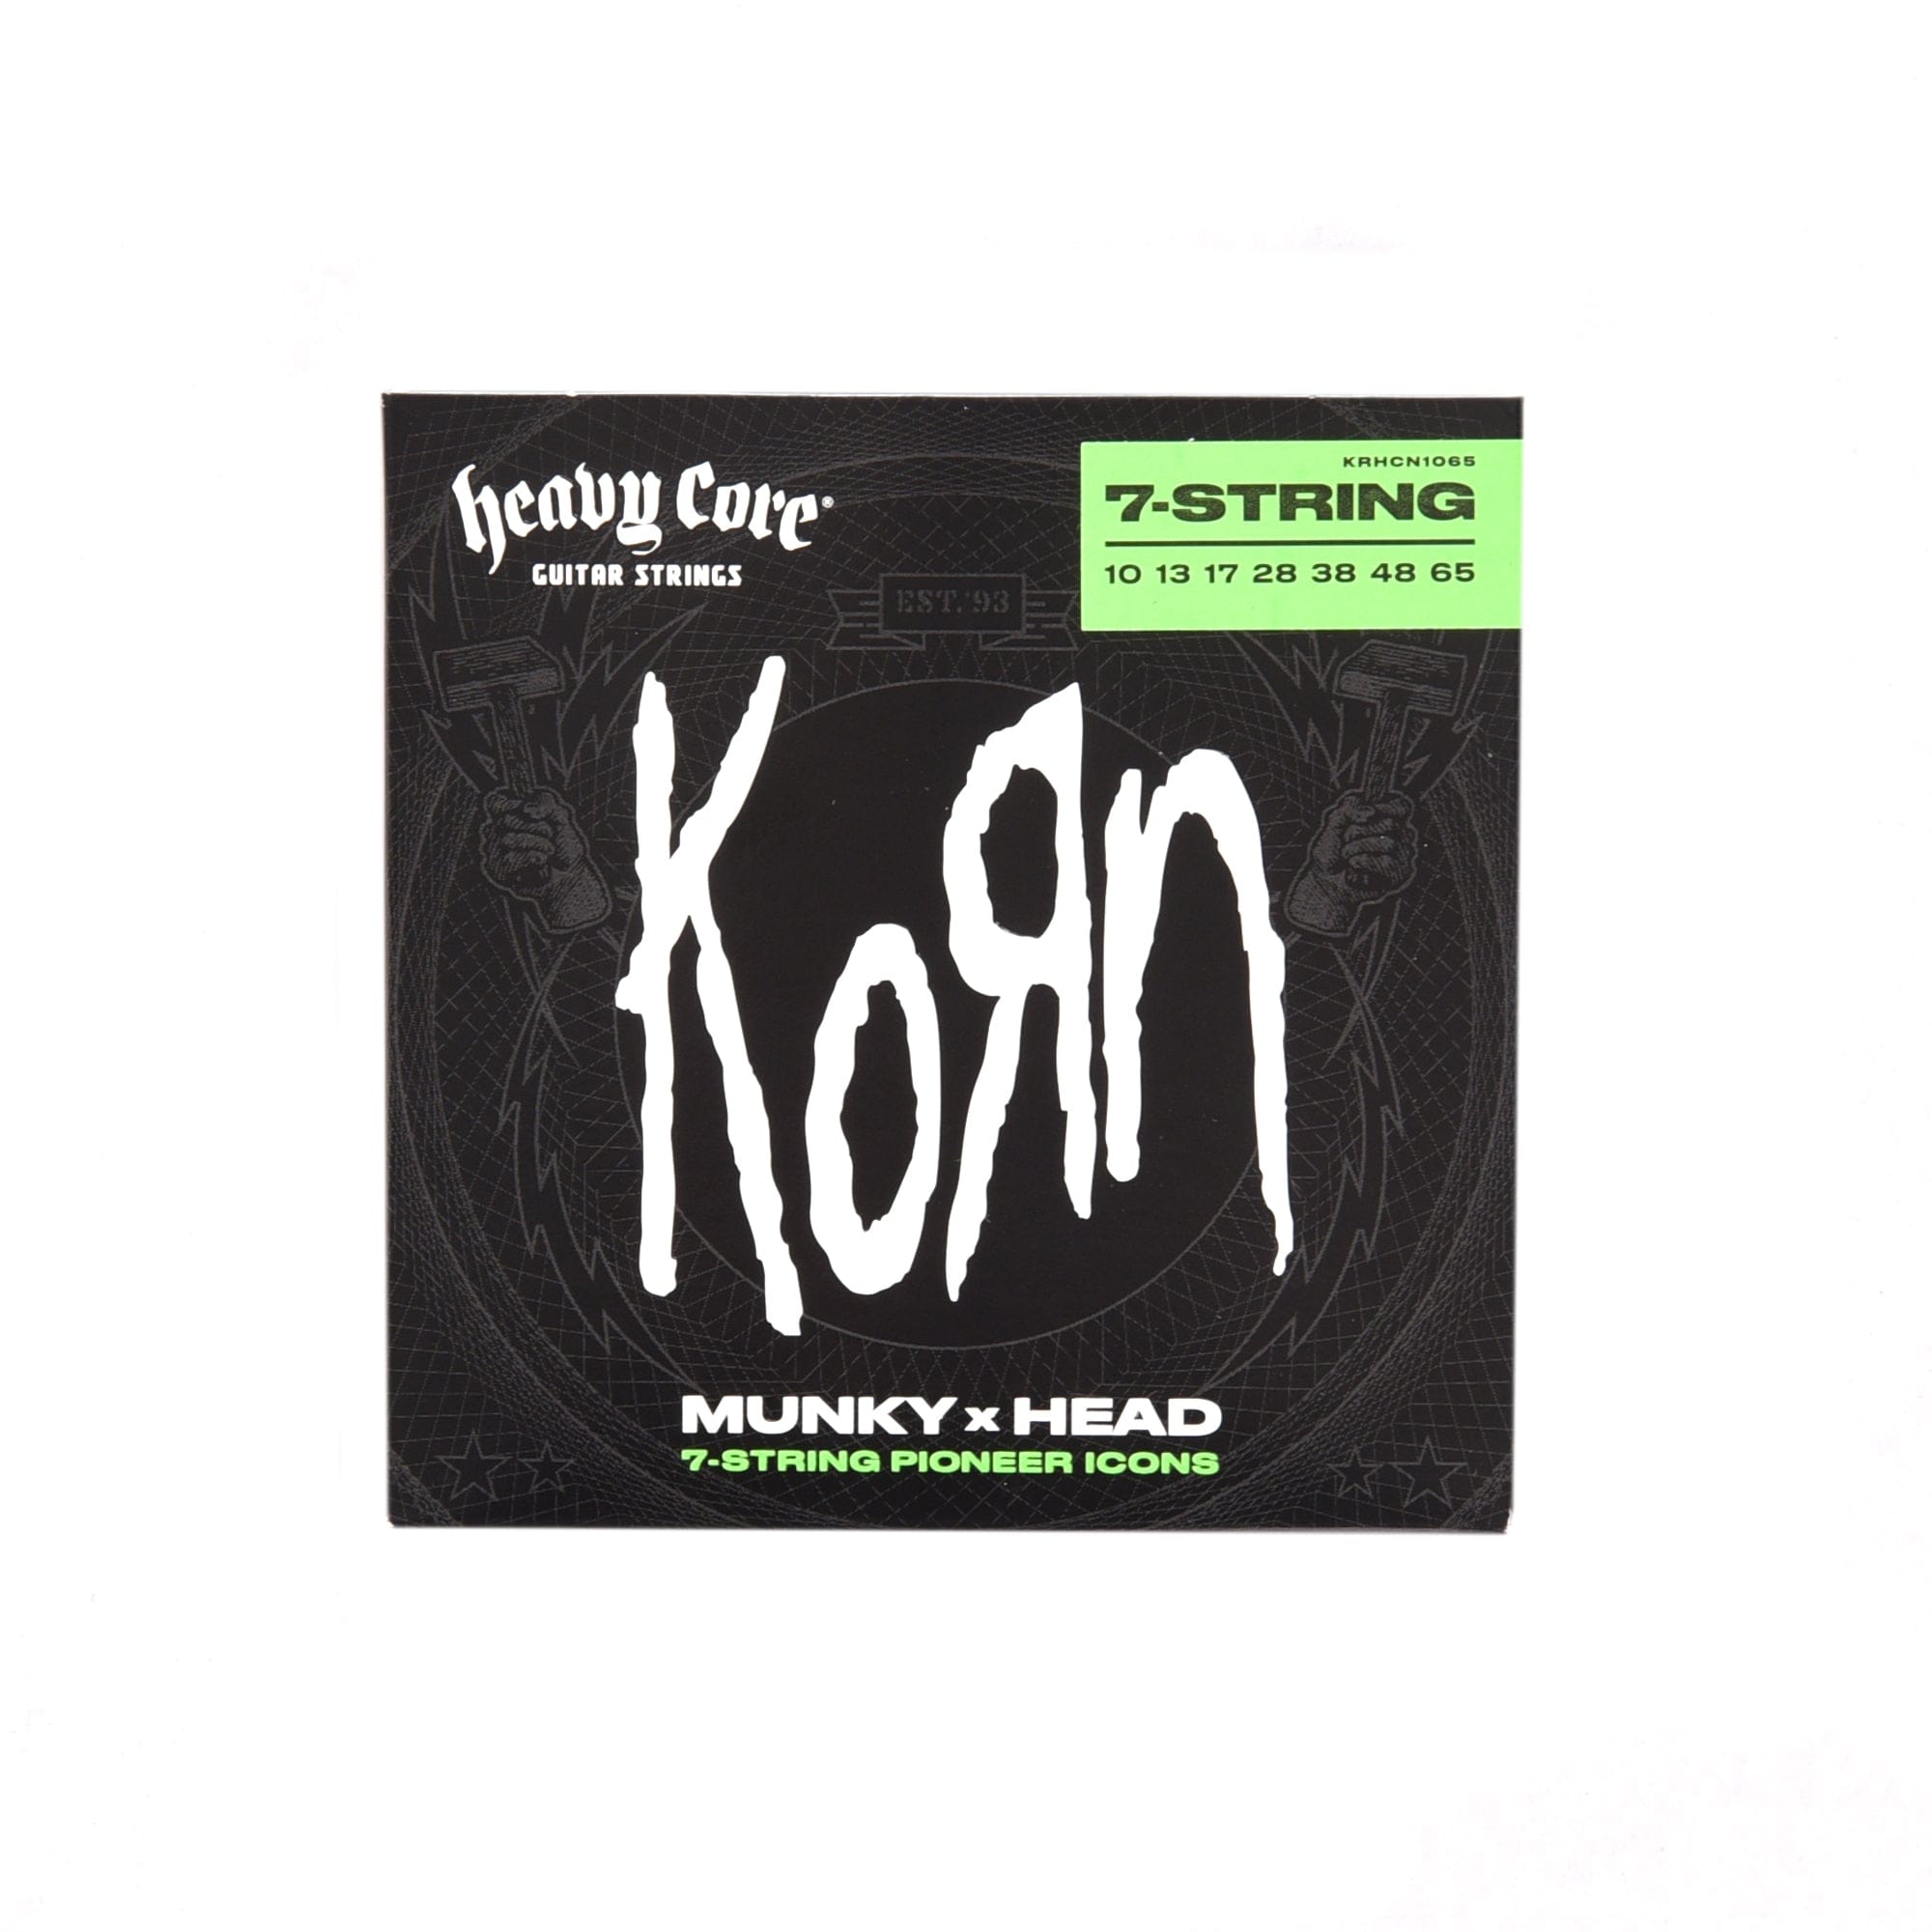 Dunlop String Lab Artist KRHCN1065 Korn Munky x Head 7-String Set 10-65